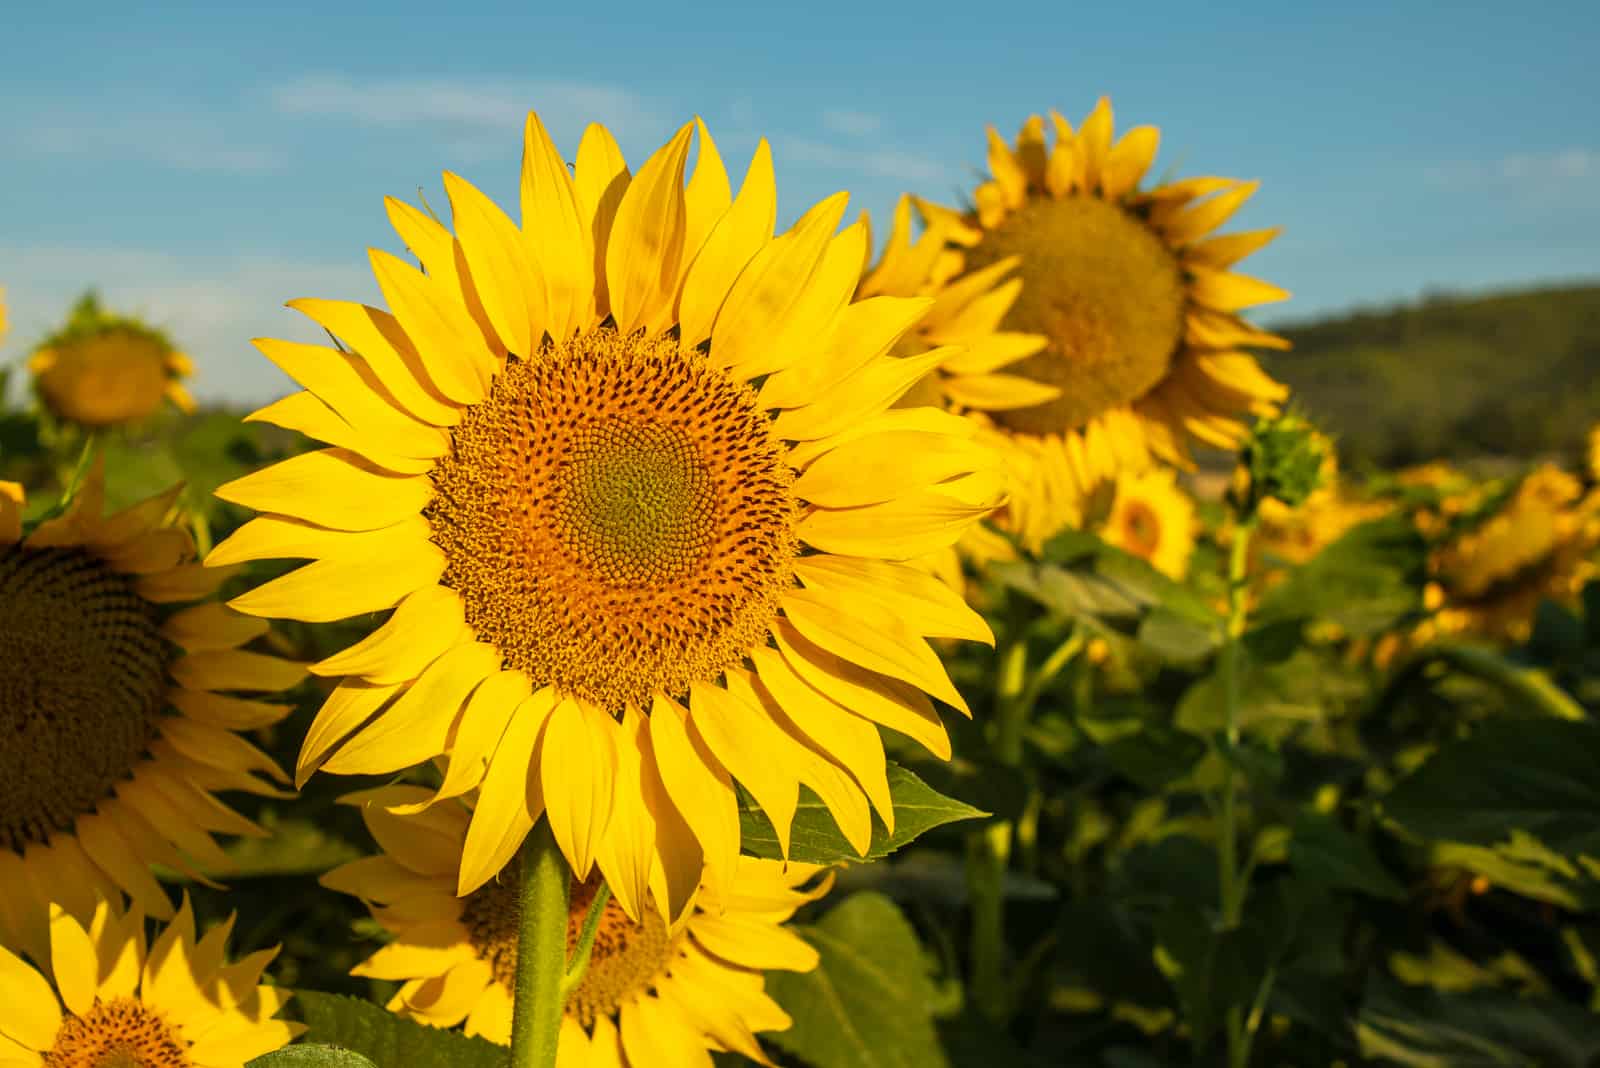 Sunflower cultivation at sunrise 